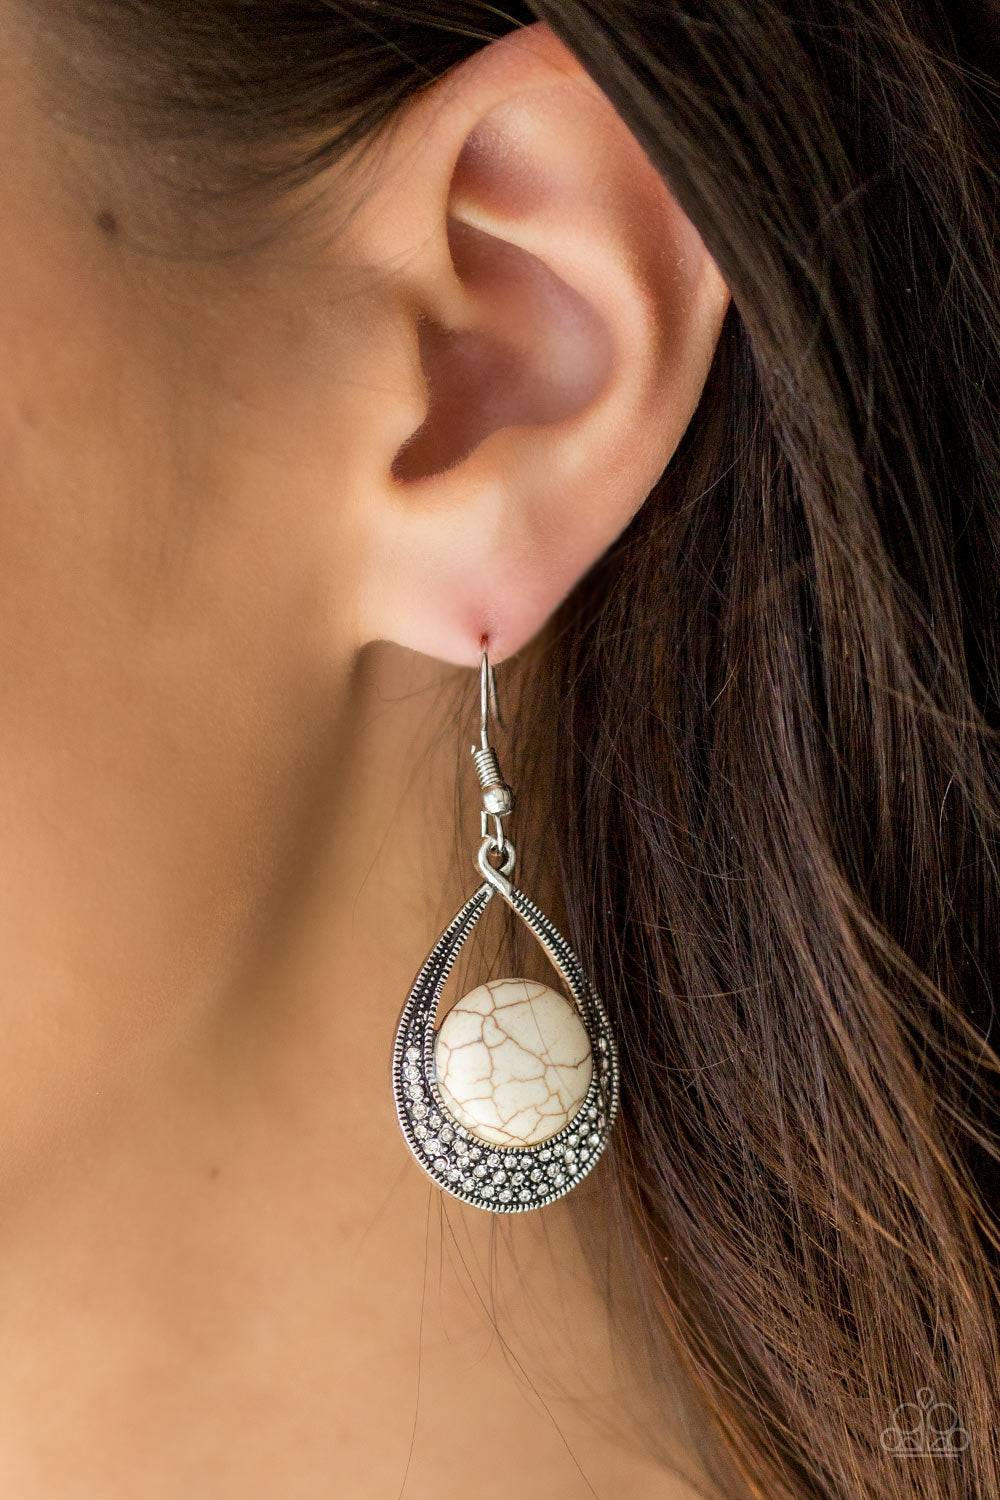 Paparazzi Richly Rio Rancho - White Stone - Rhinestone Earrings - $5 Jewelry With Ashley Swint